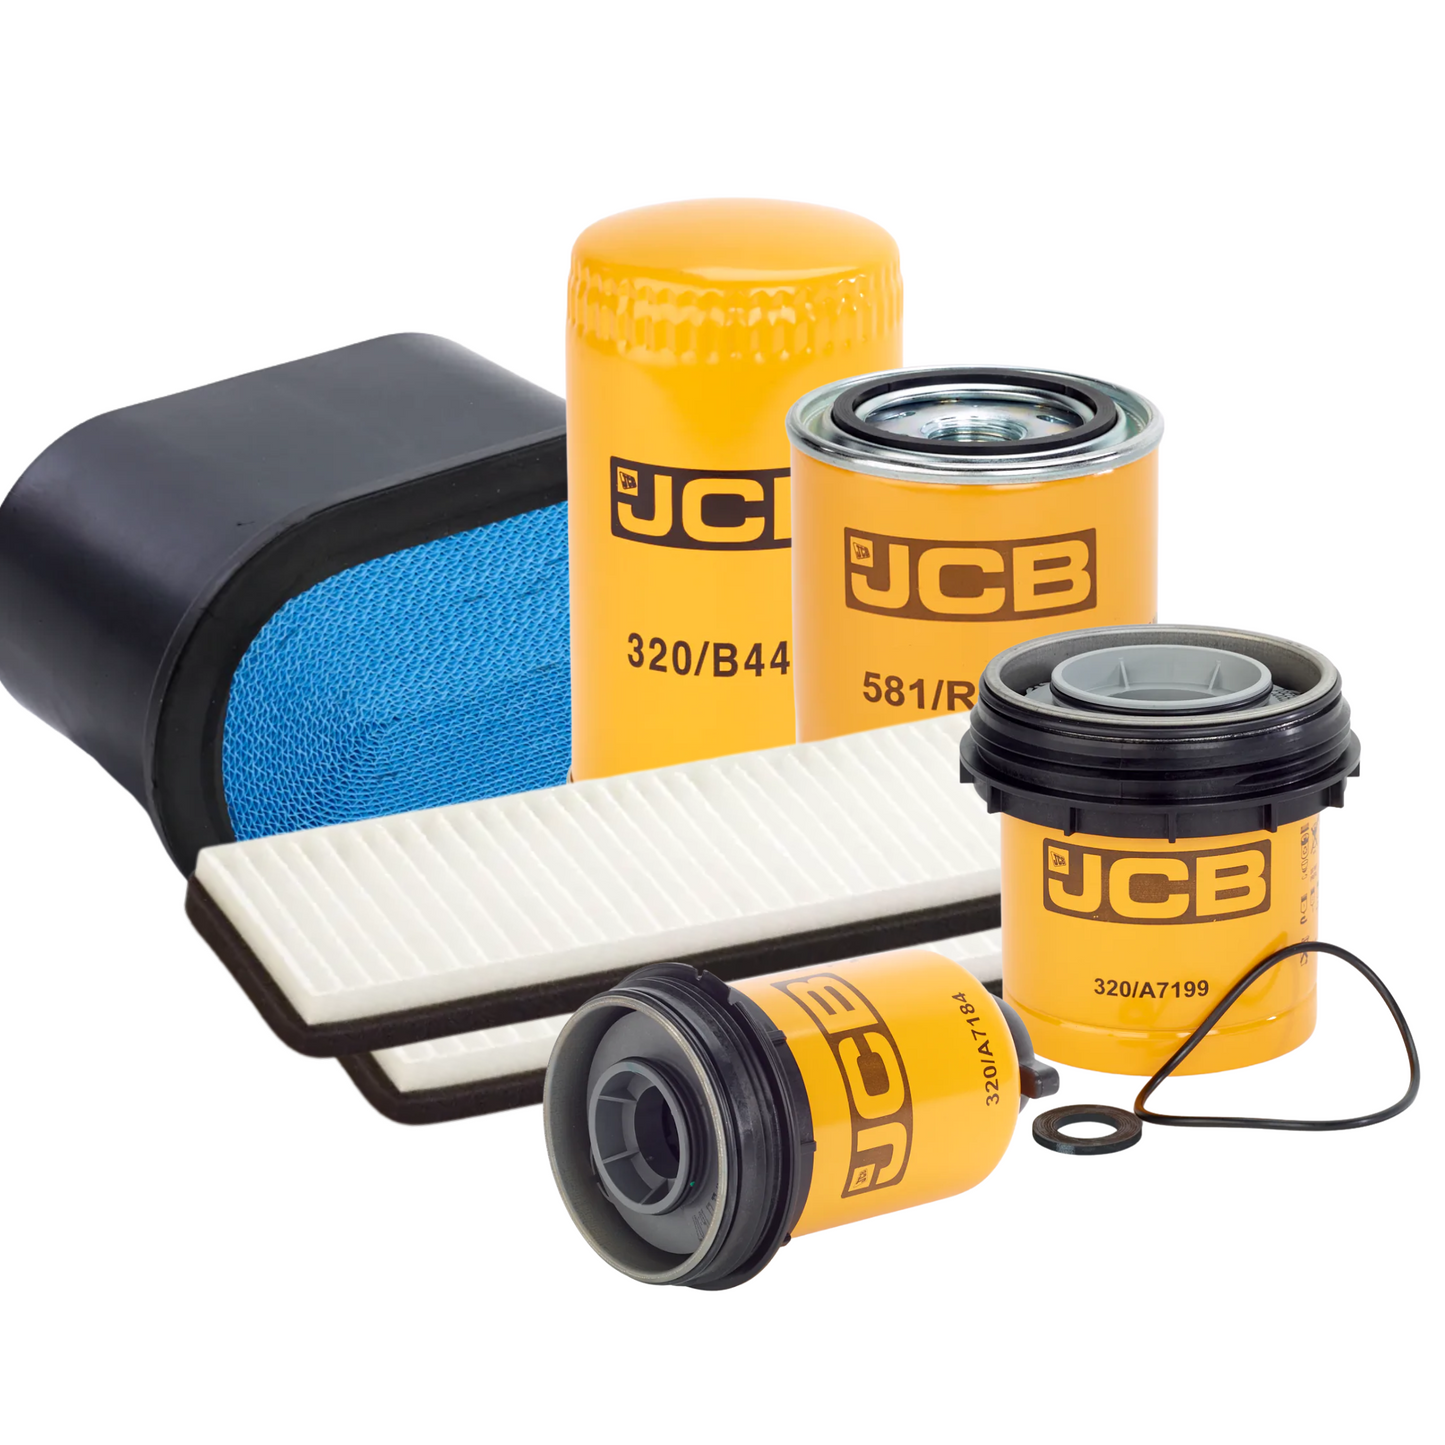 JCB 533-105 5000 Hour Filter Service Kit